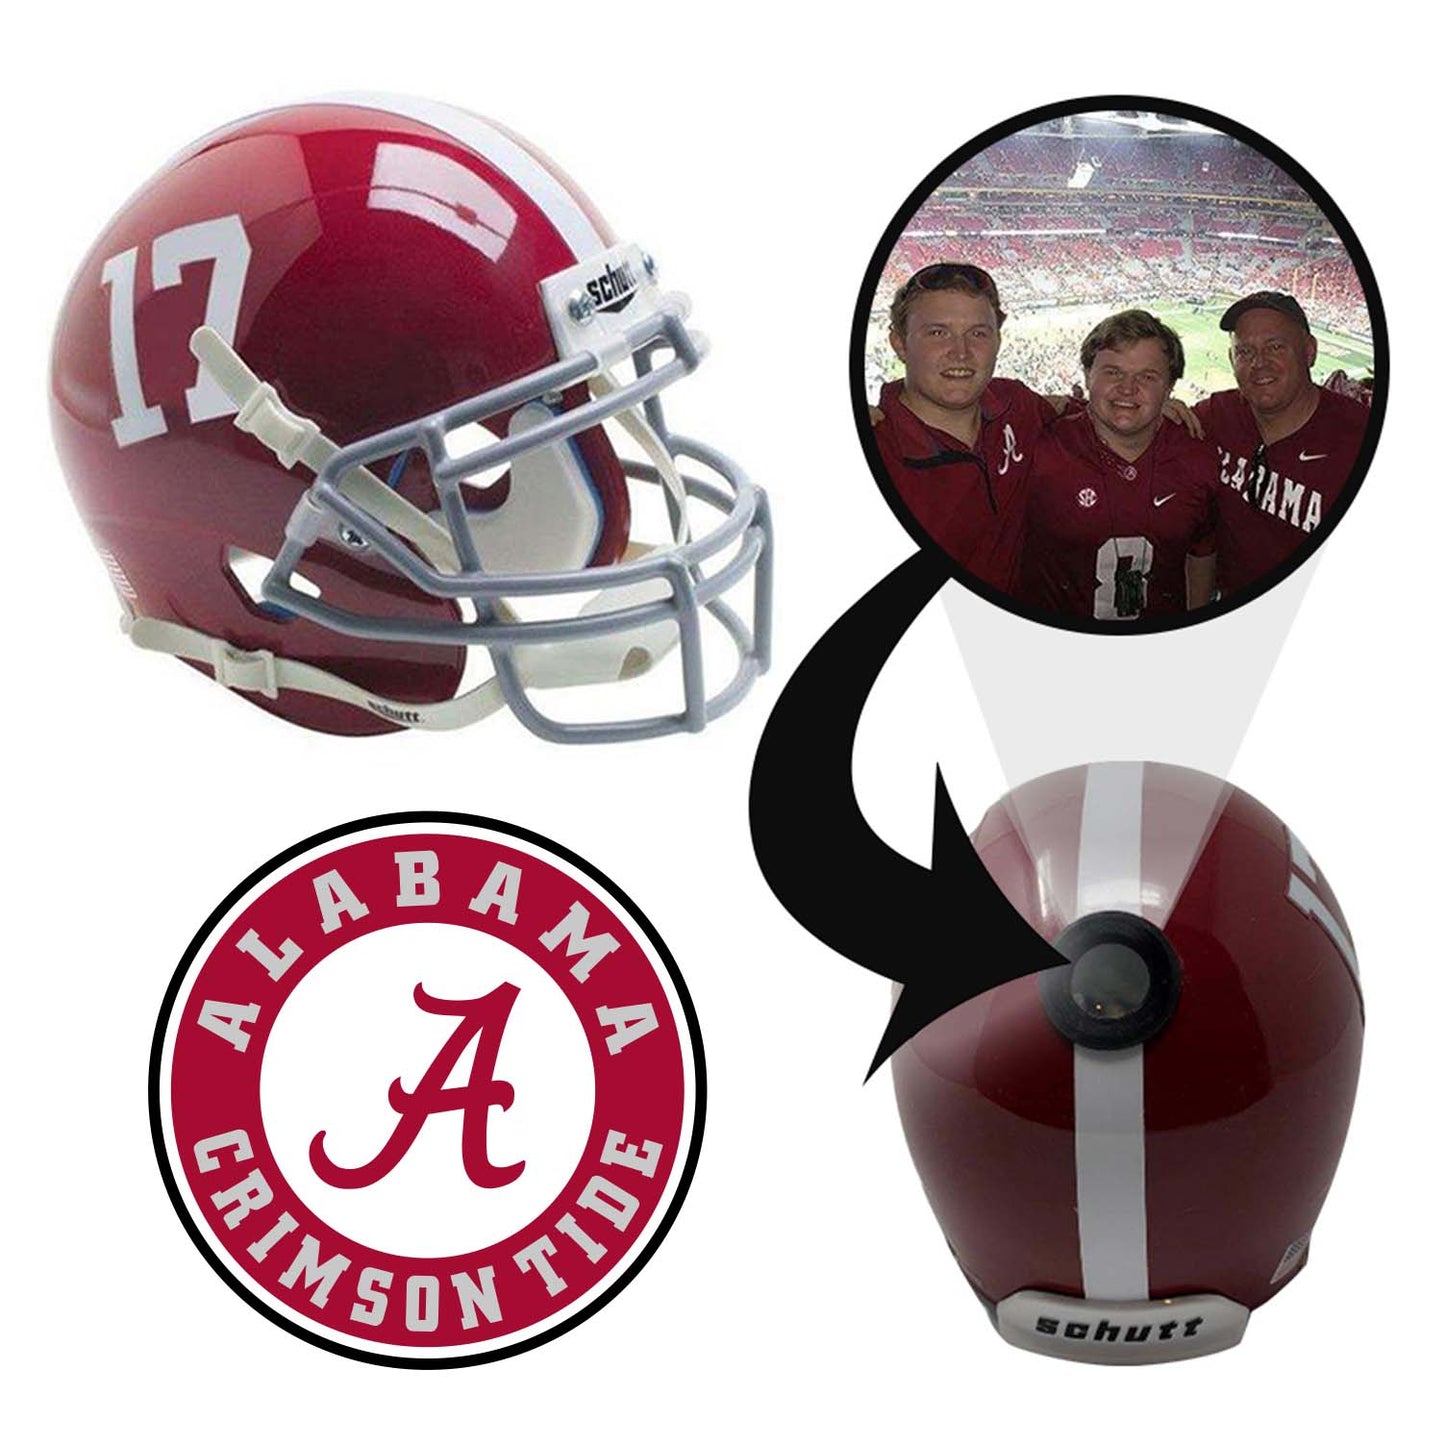 Alabama Crimson Tide College Football Collectible Schutt Mini Helmet - Picture Inside - FANZ Collectibles